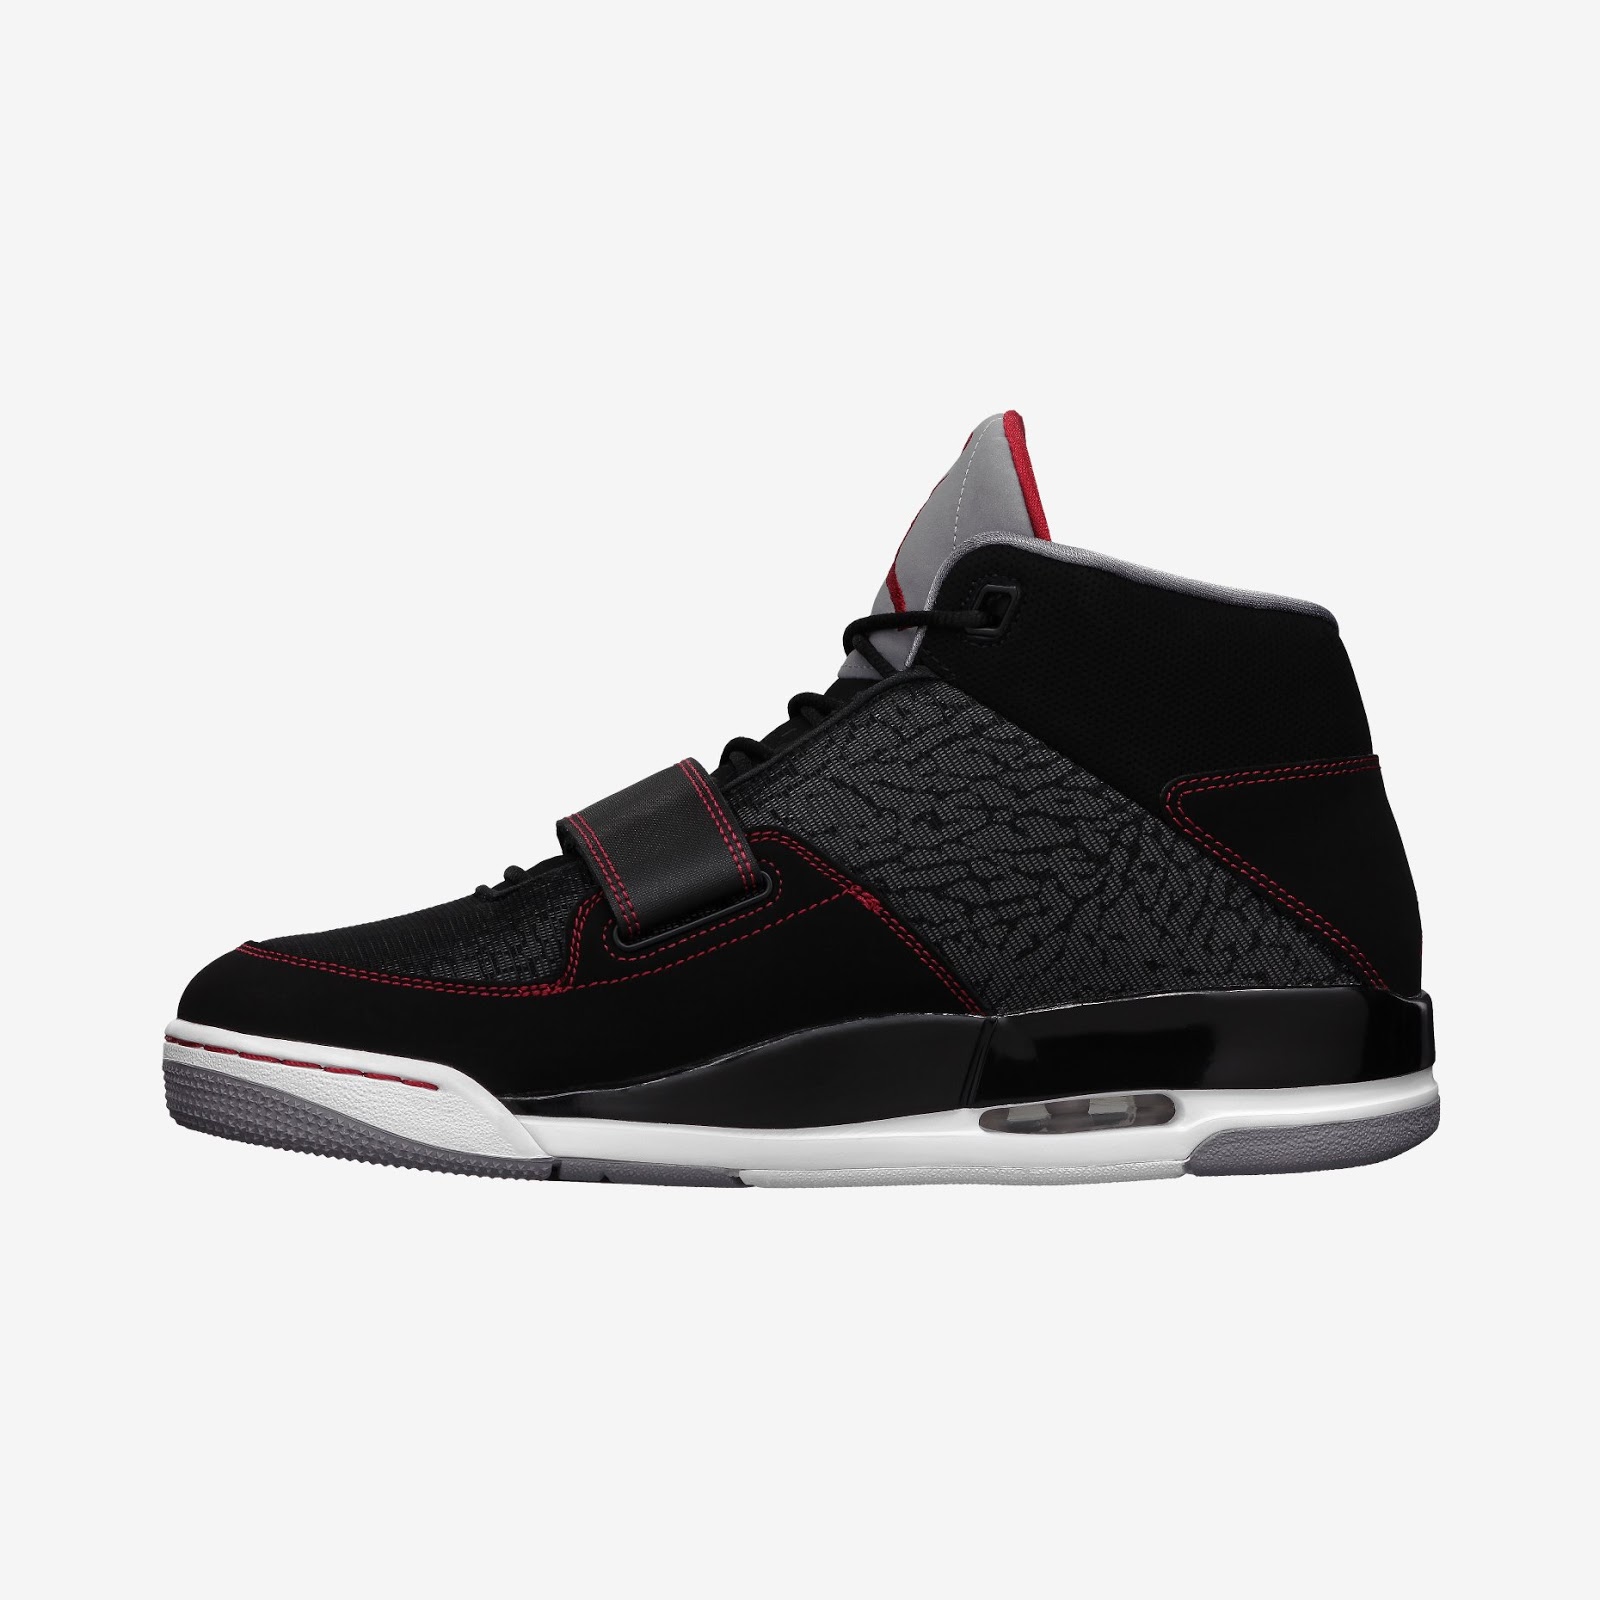 Nike Air Jordan Retro Basketball Shoes and Sandals!: 2013